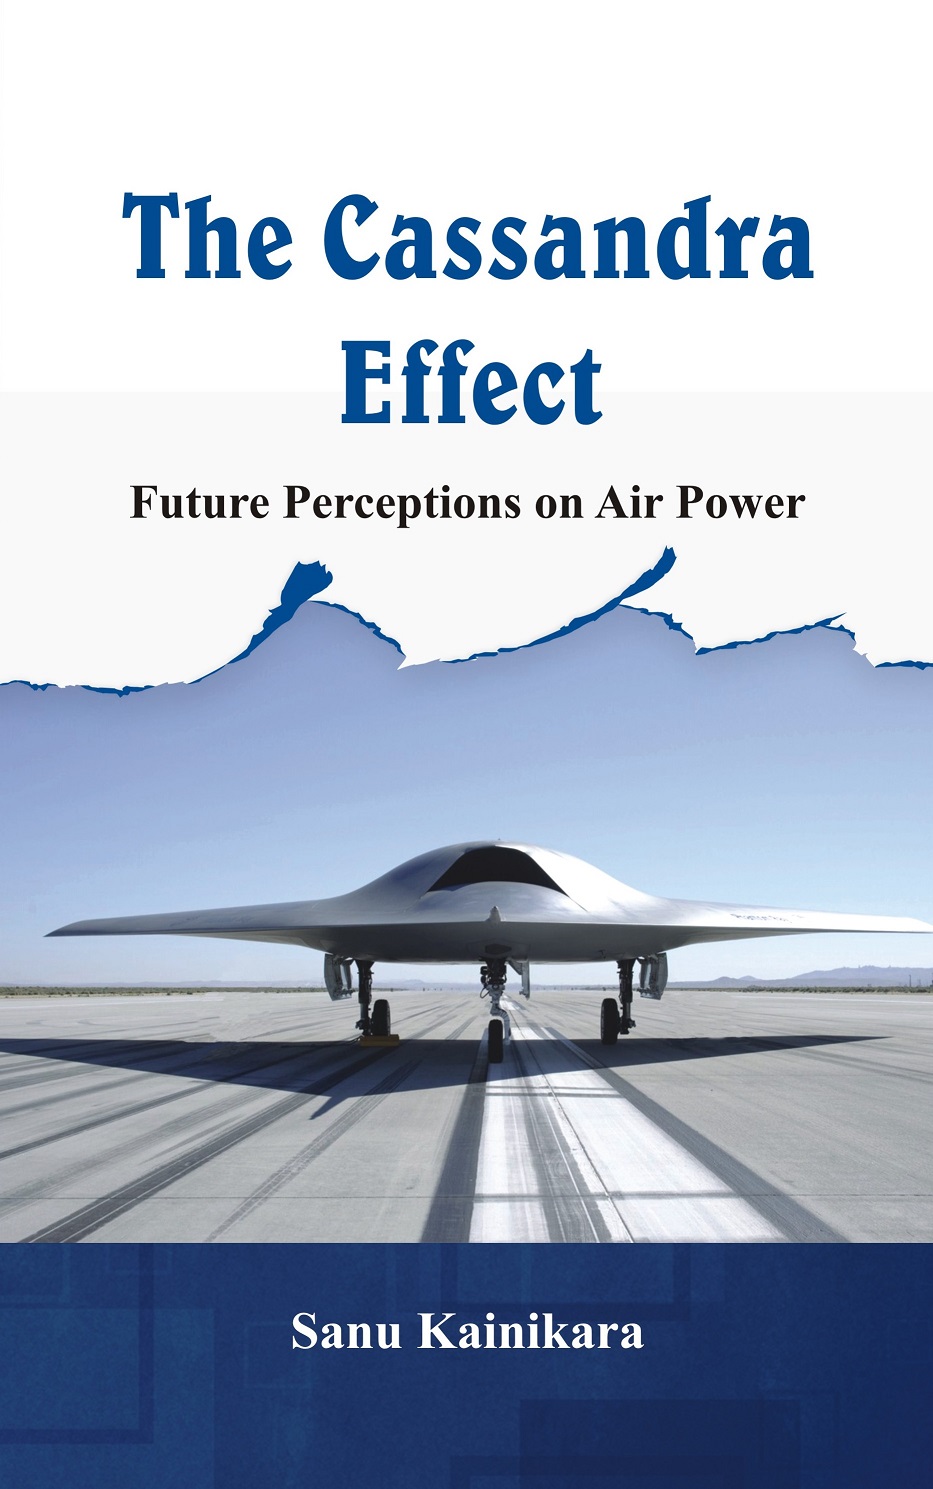 The Cassandra Effect: Future Perceptions on Air Power